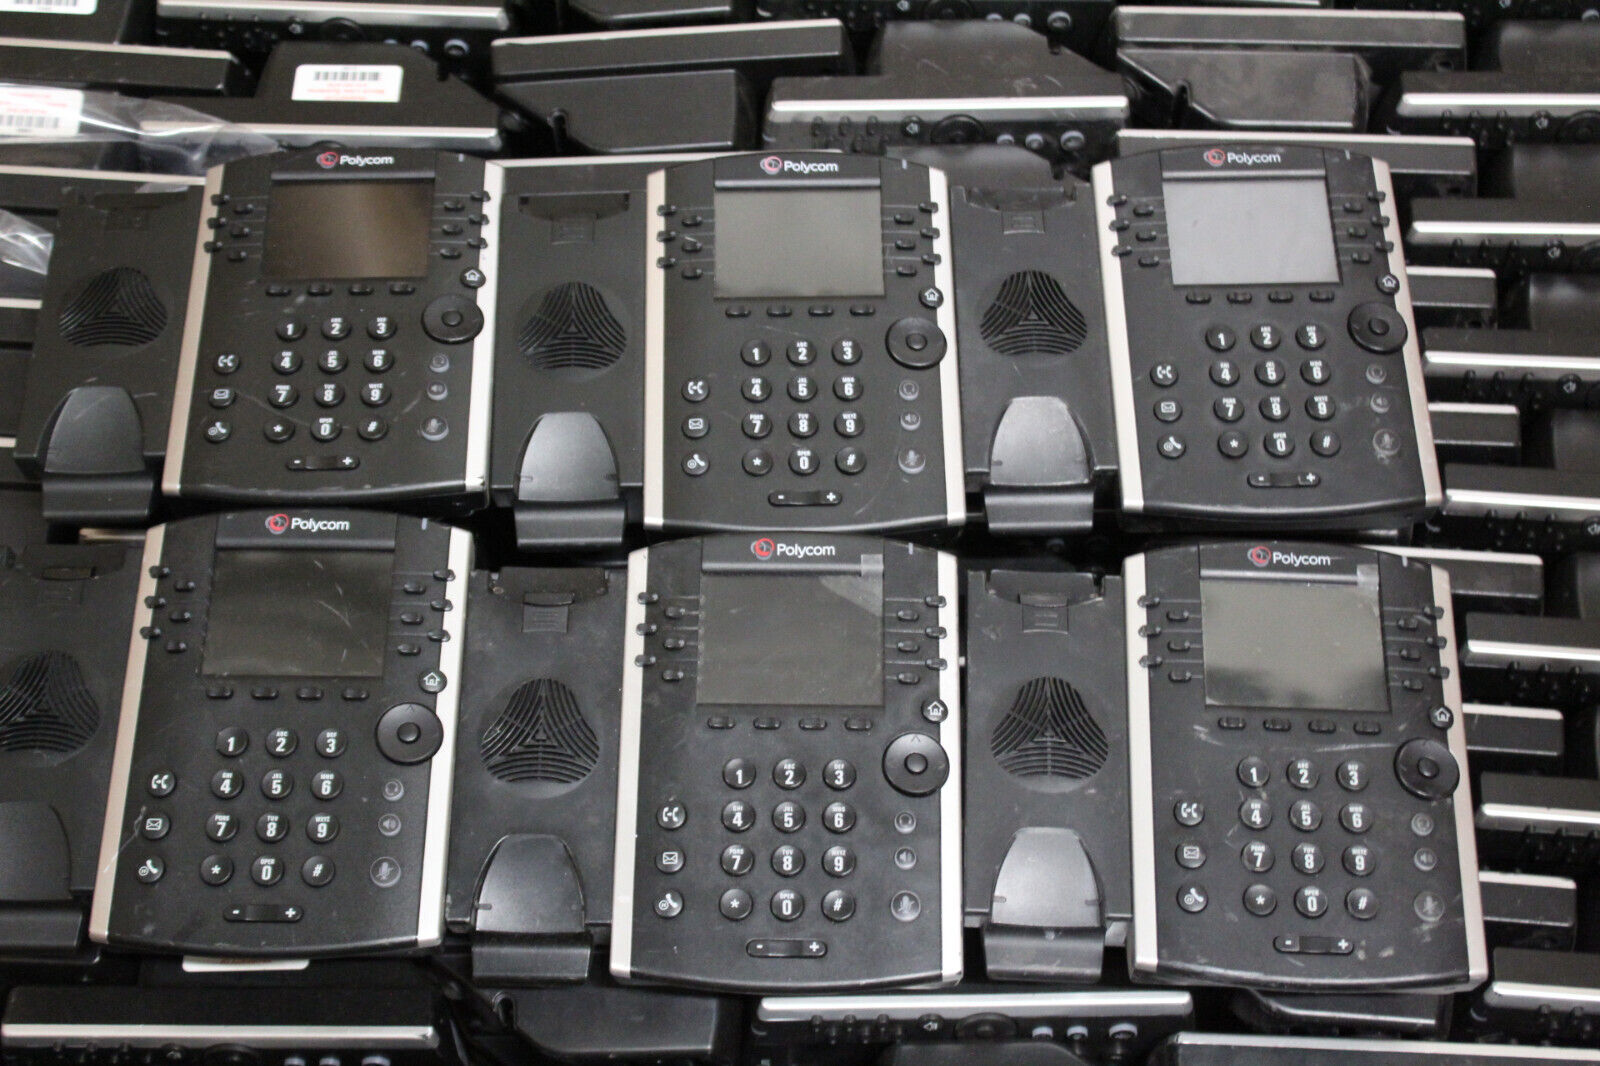 Lot of 100 Polycom VVX 400 Office IP Phones 2201-46104-001 W/ Stands & Handsets